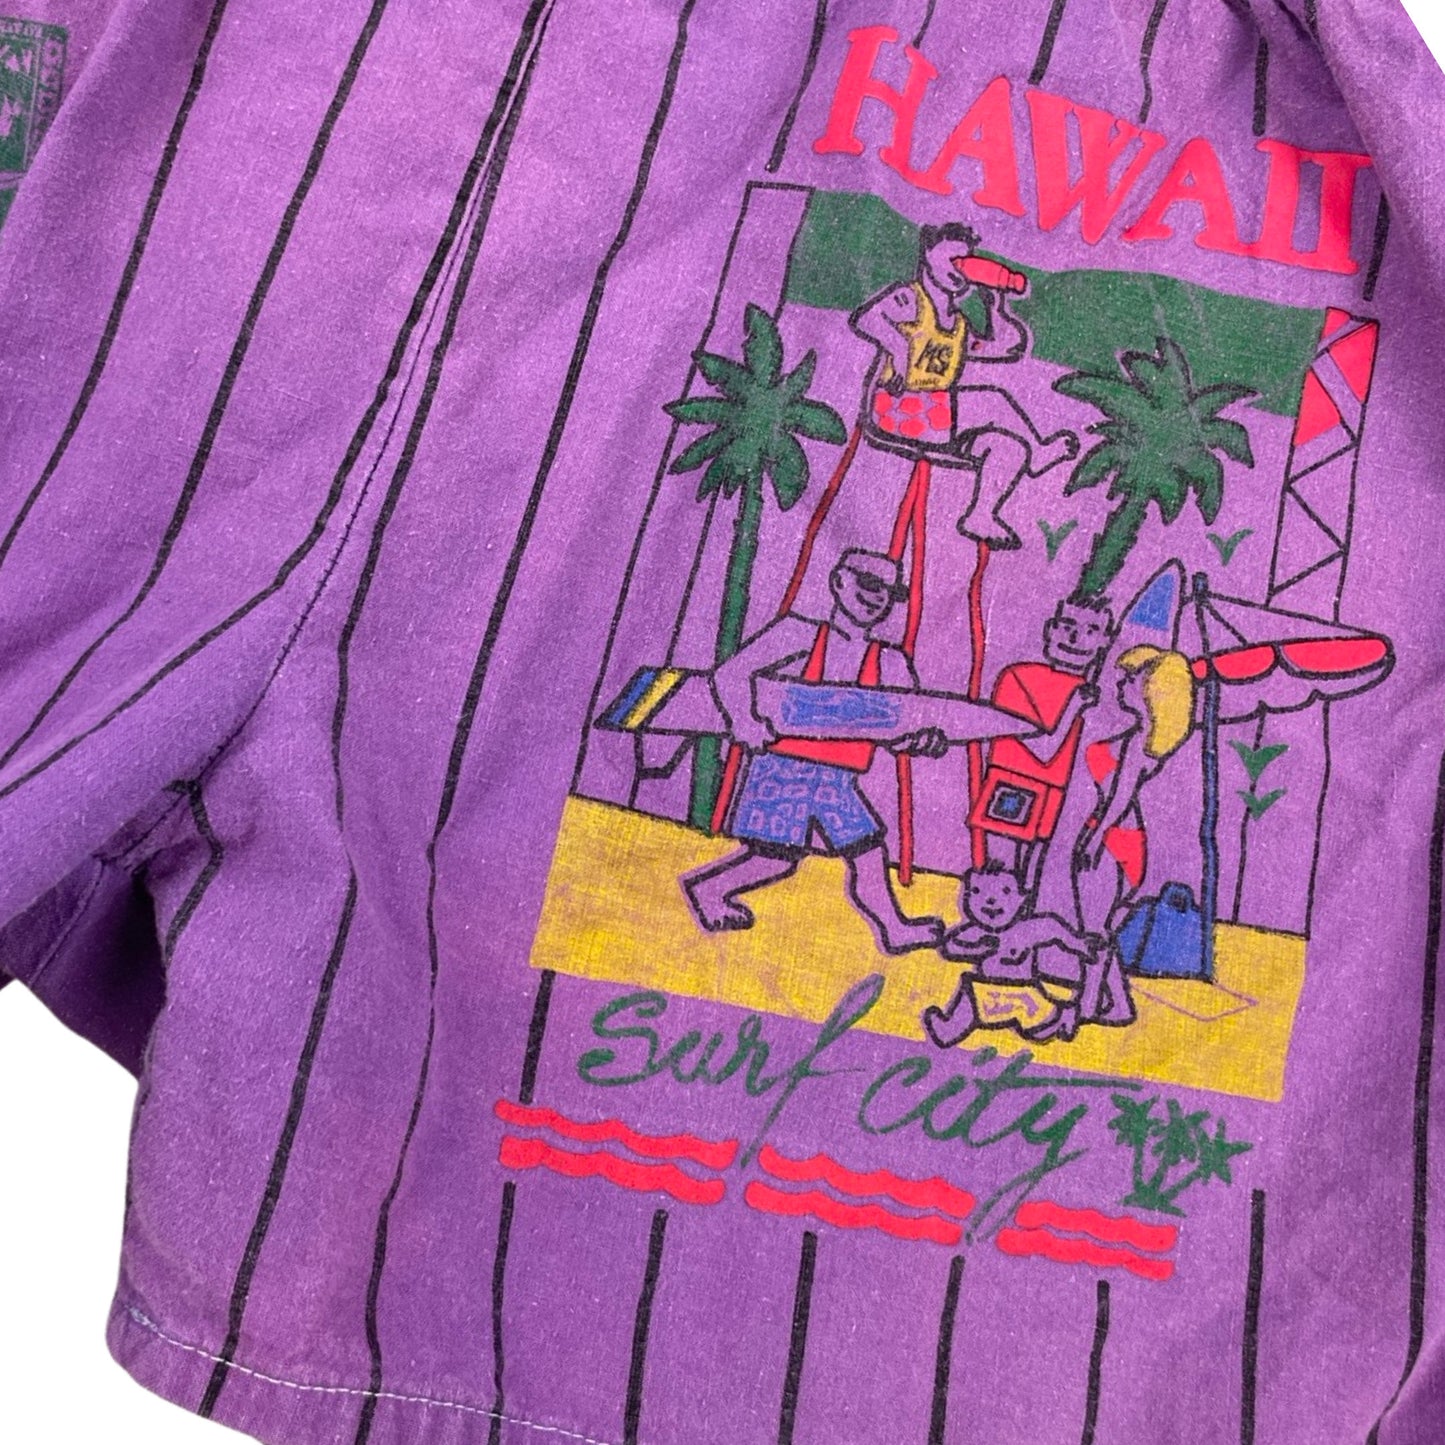 Vintage Hawaiian Graphic Striped Purple Cotton Shorts L/XL